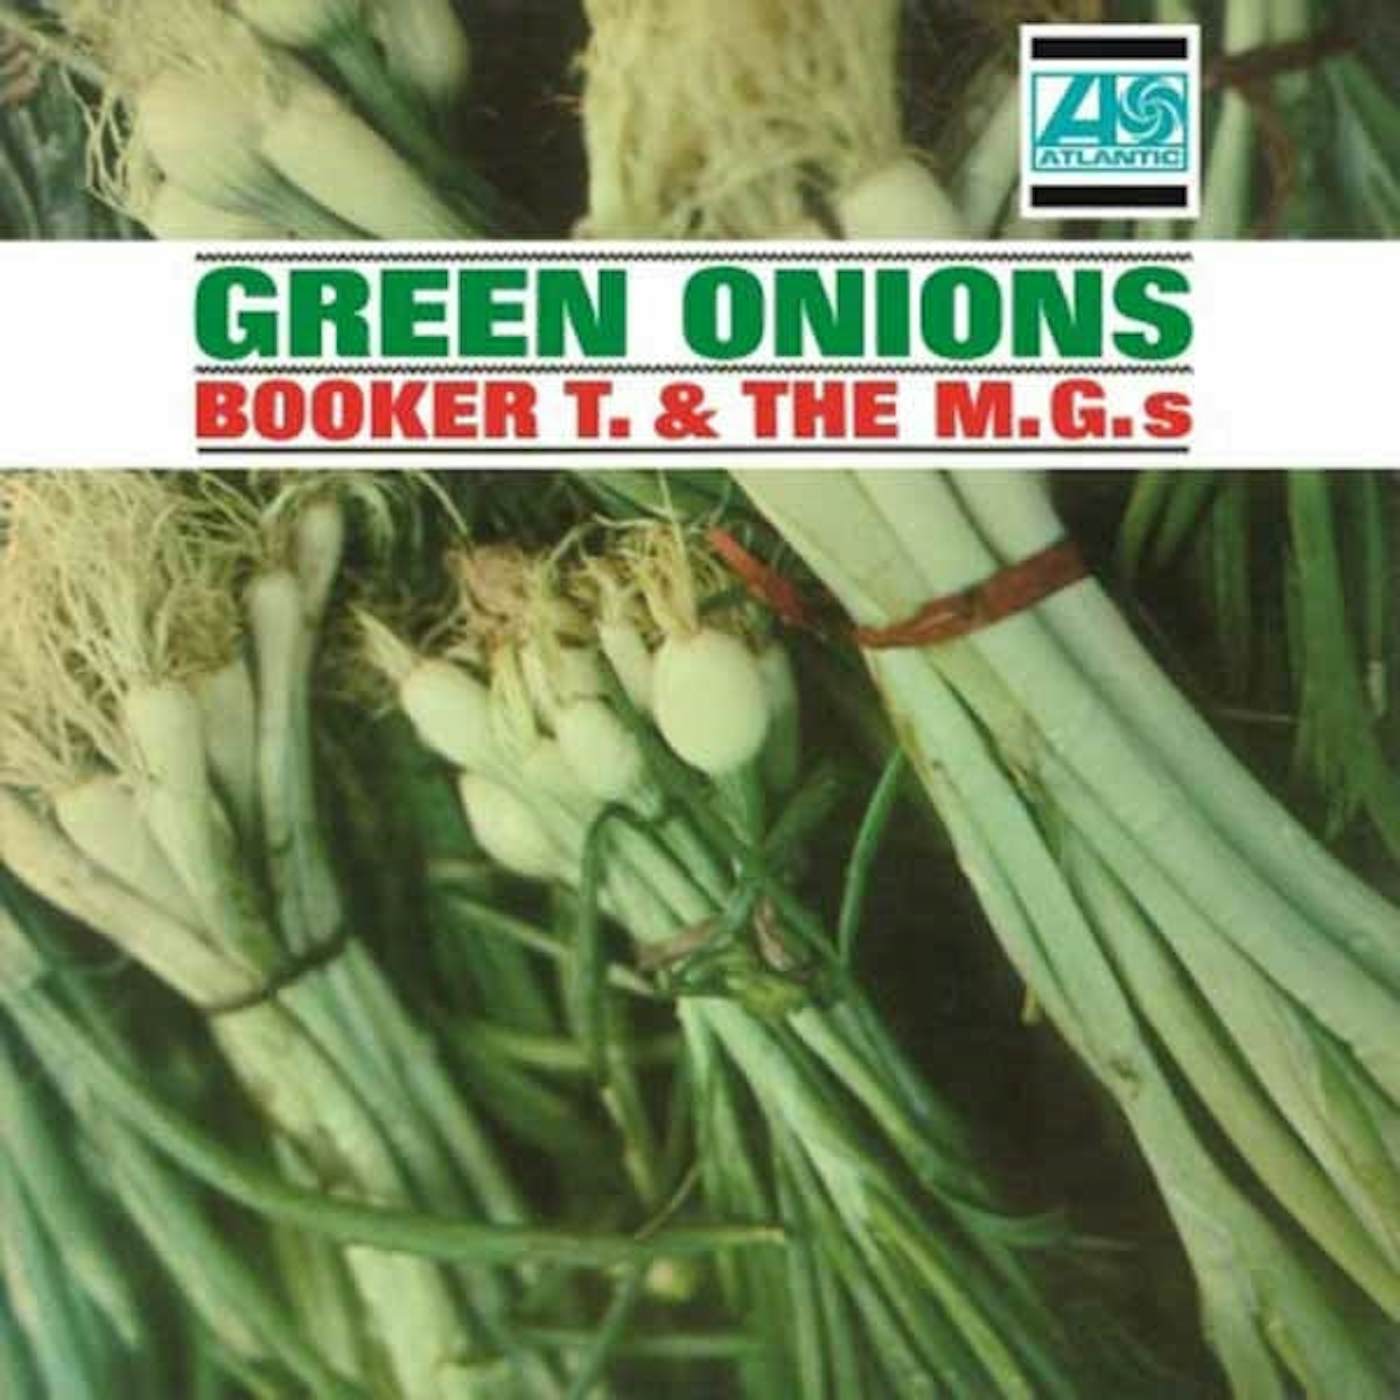 Booker T. & the M.G.'s LP - Green Onions (Vinyl)